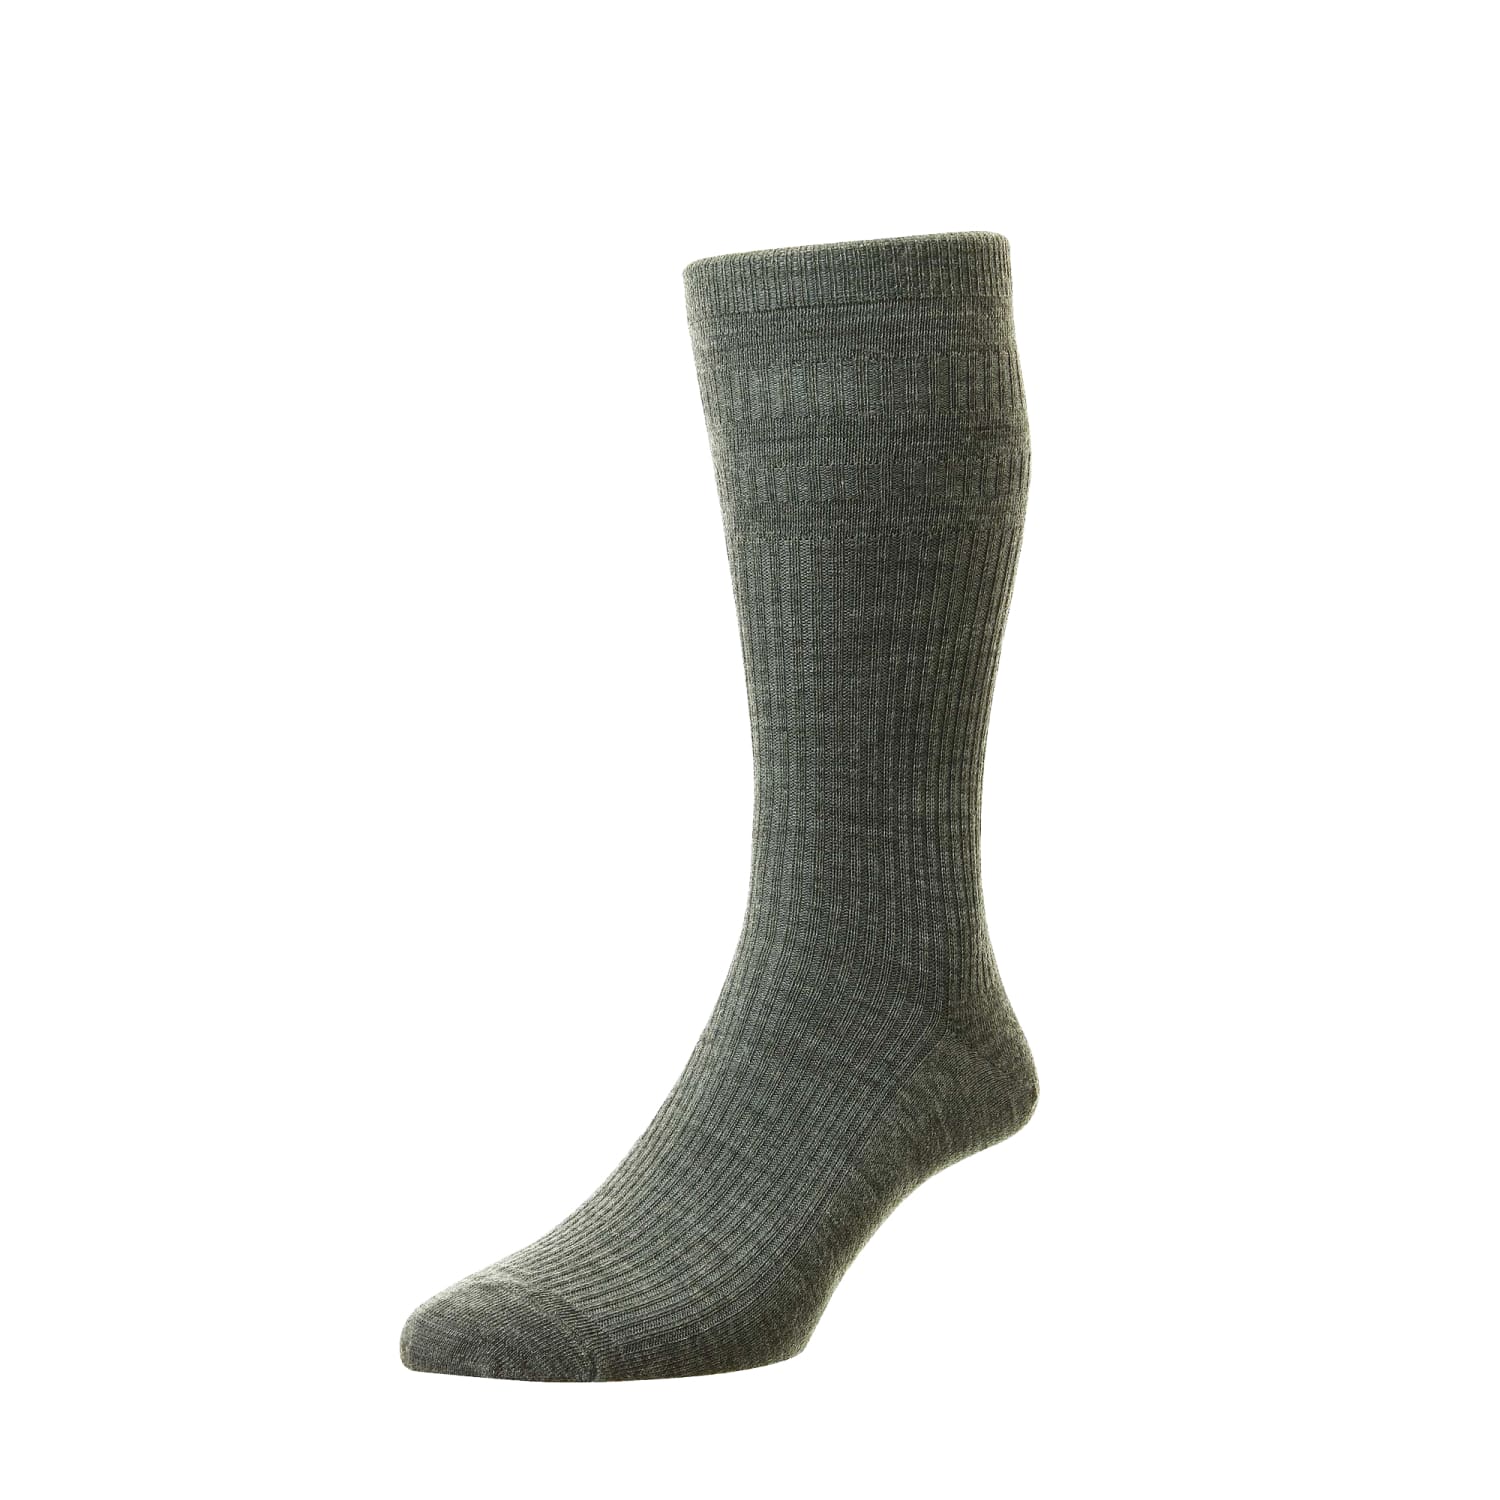 HJ Softop Socks - HJ90 - Wool - Mid Grey 1